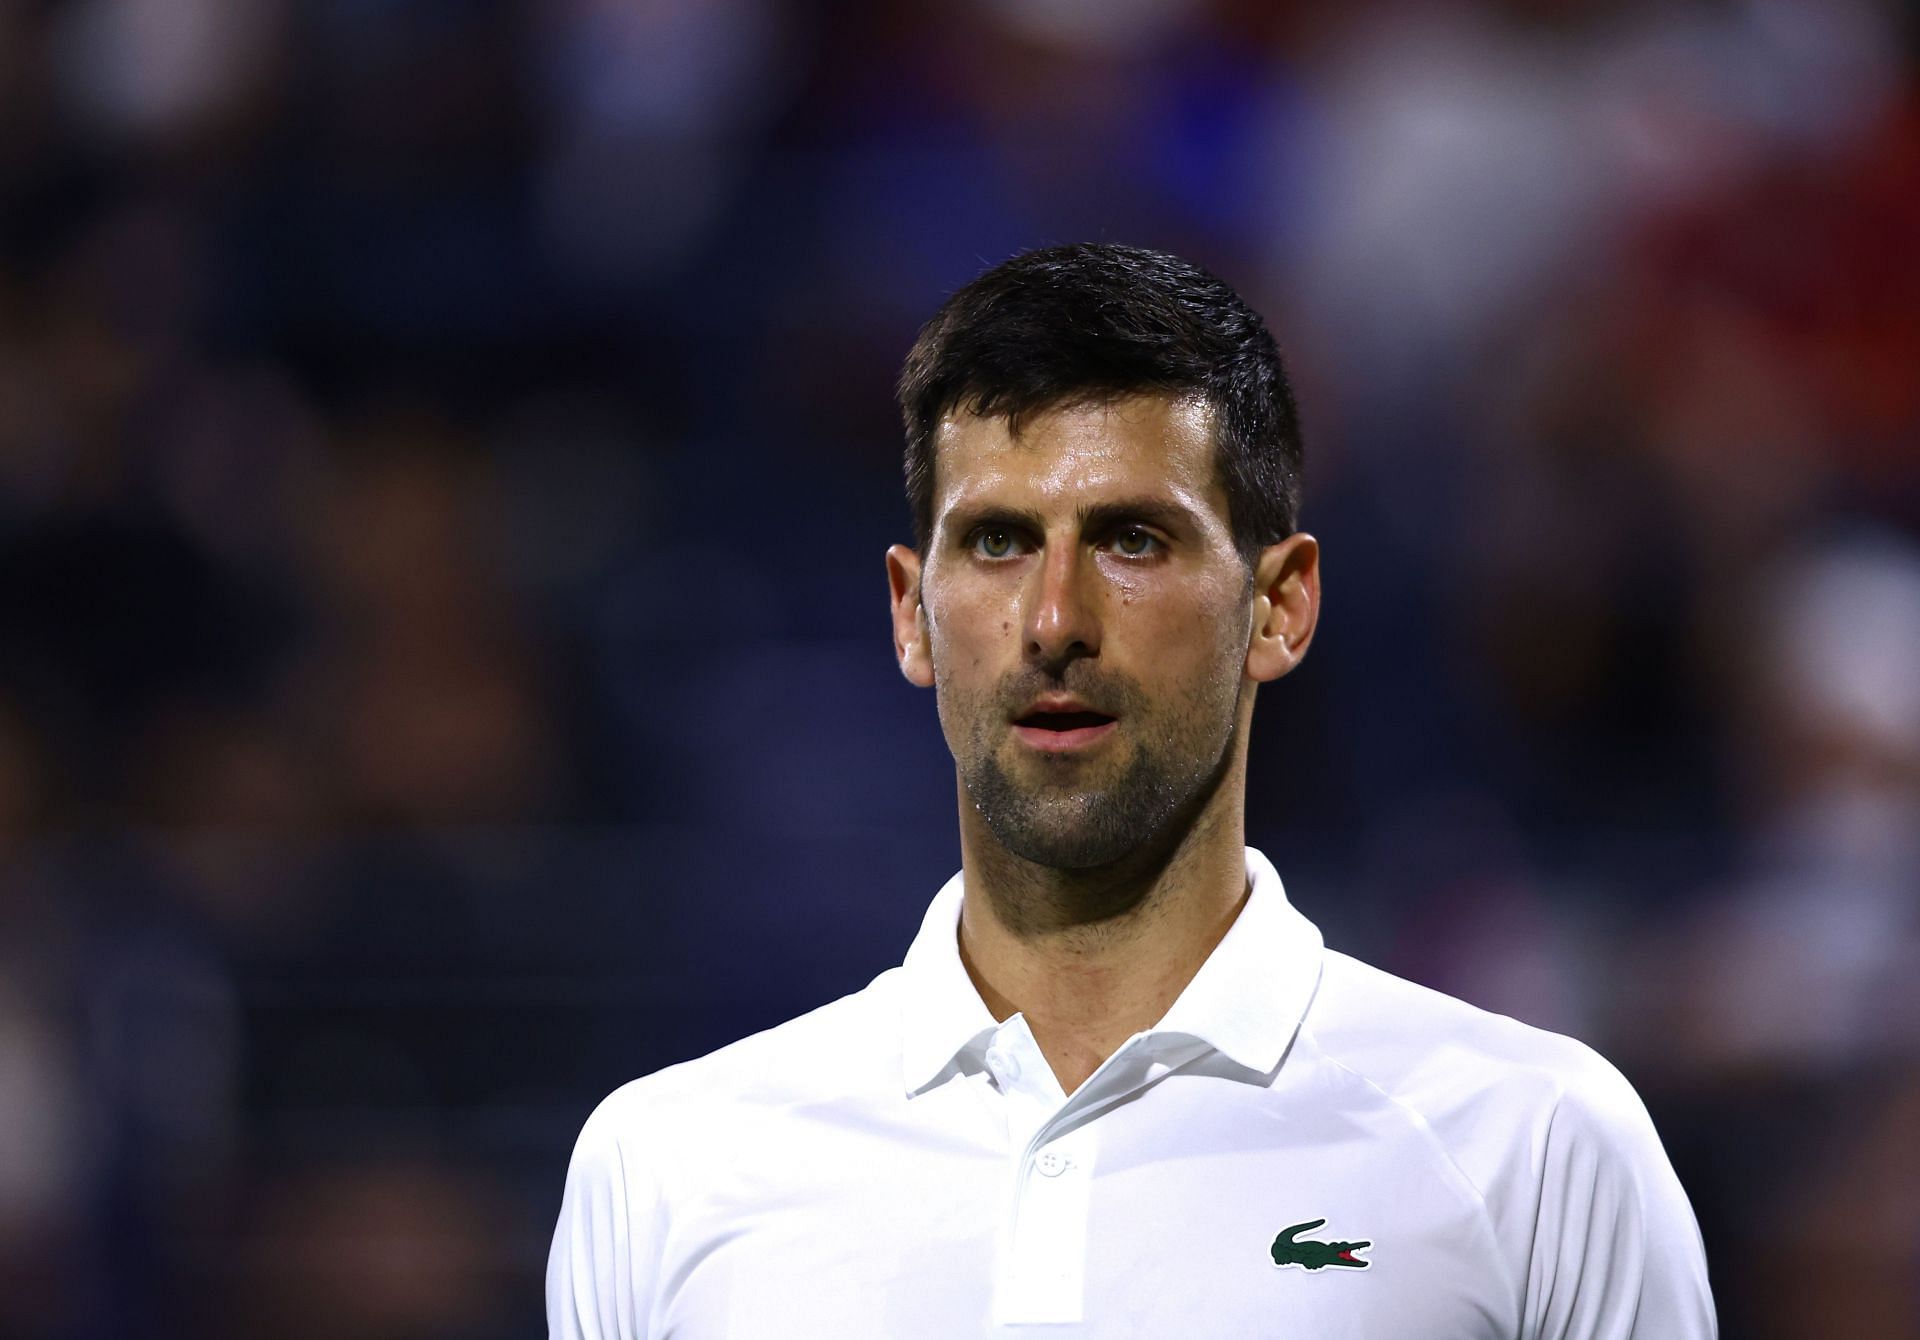 Novak Djokovic Stunned: Vesley 'SHOCKS' Djokovic in Dubai Tennis Quarterfinals, Serb loses World No. 1 Rank to Medvedev